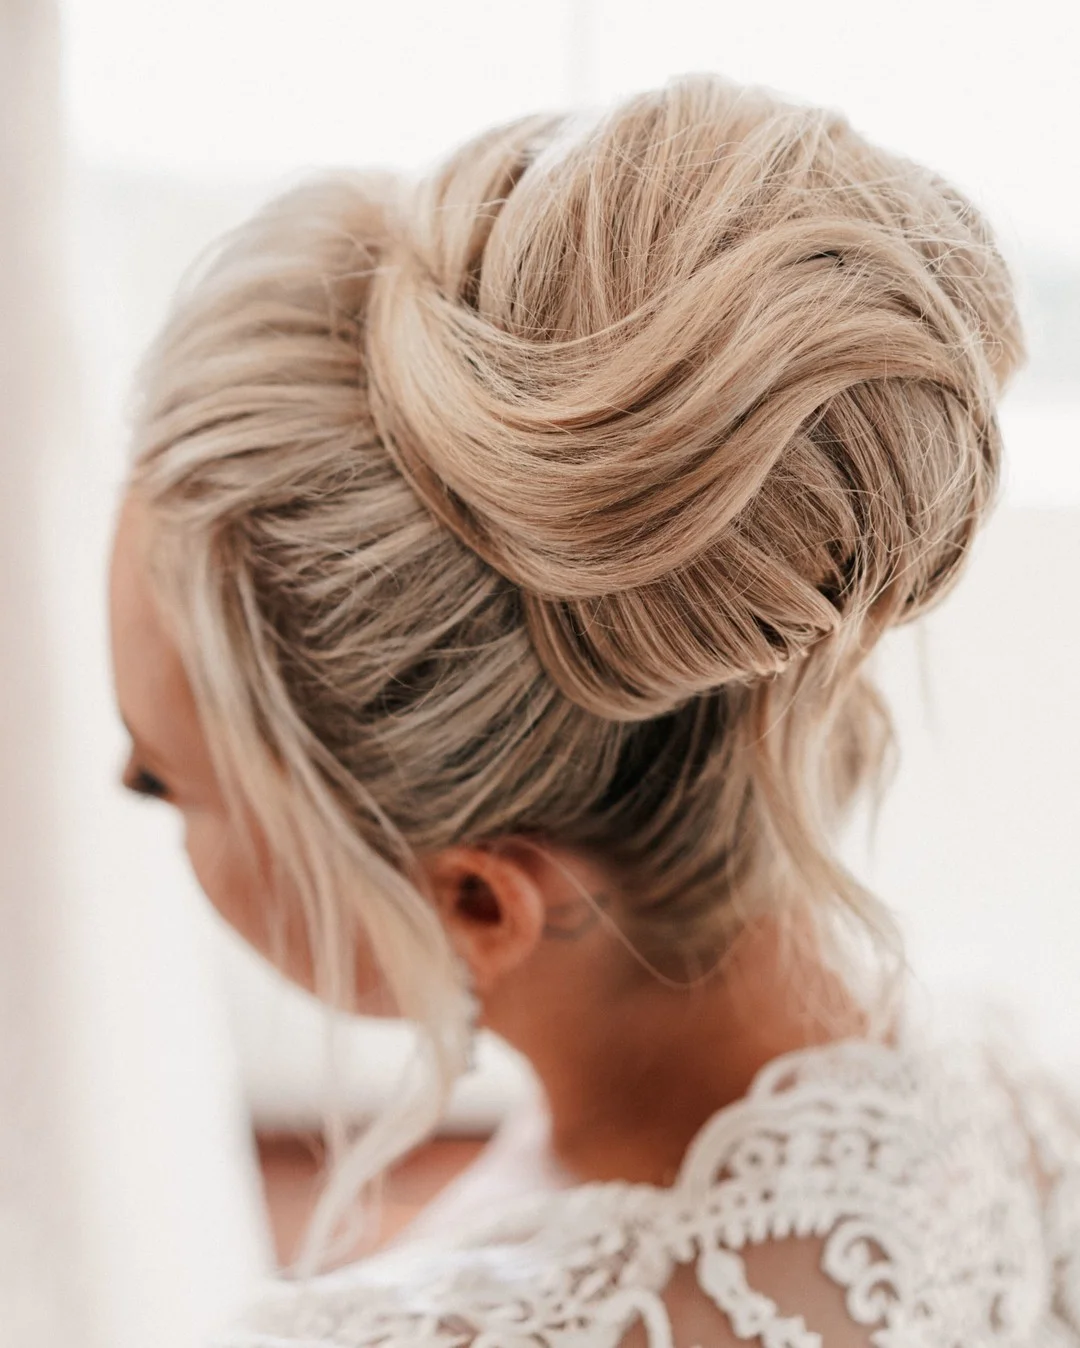 Best-wedding-updo-hairstyles-high-bun-Evalyn-Parsons-photo-luke-middlemiss-photography